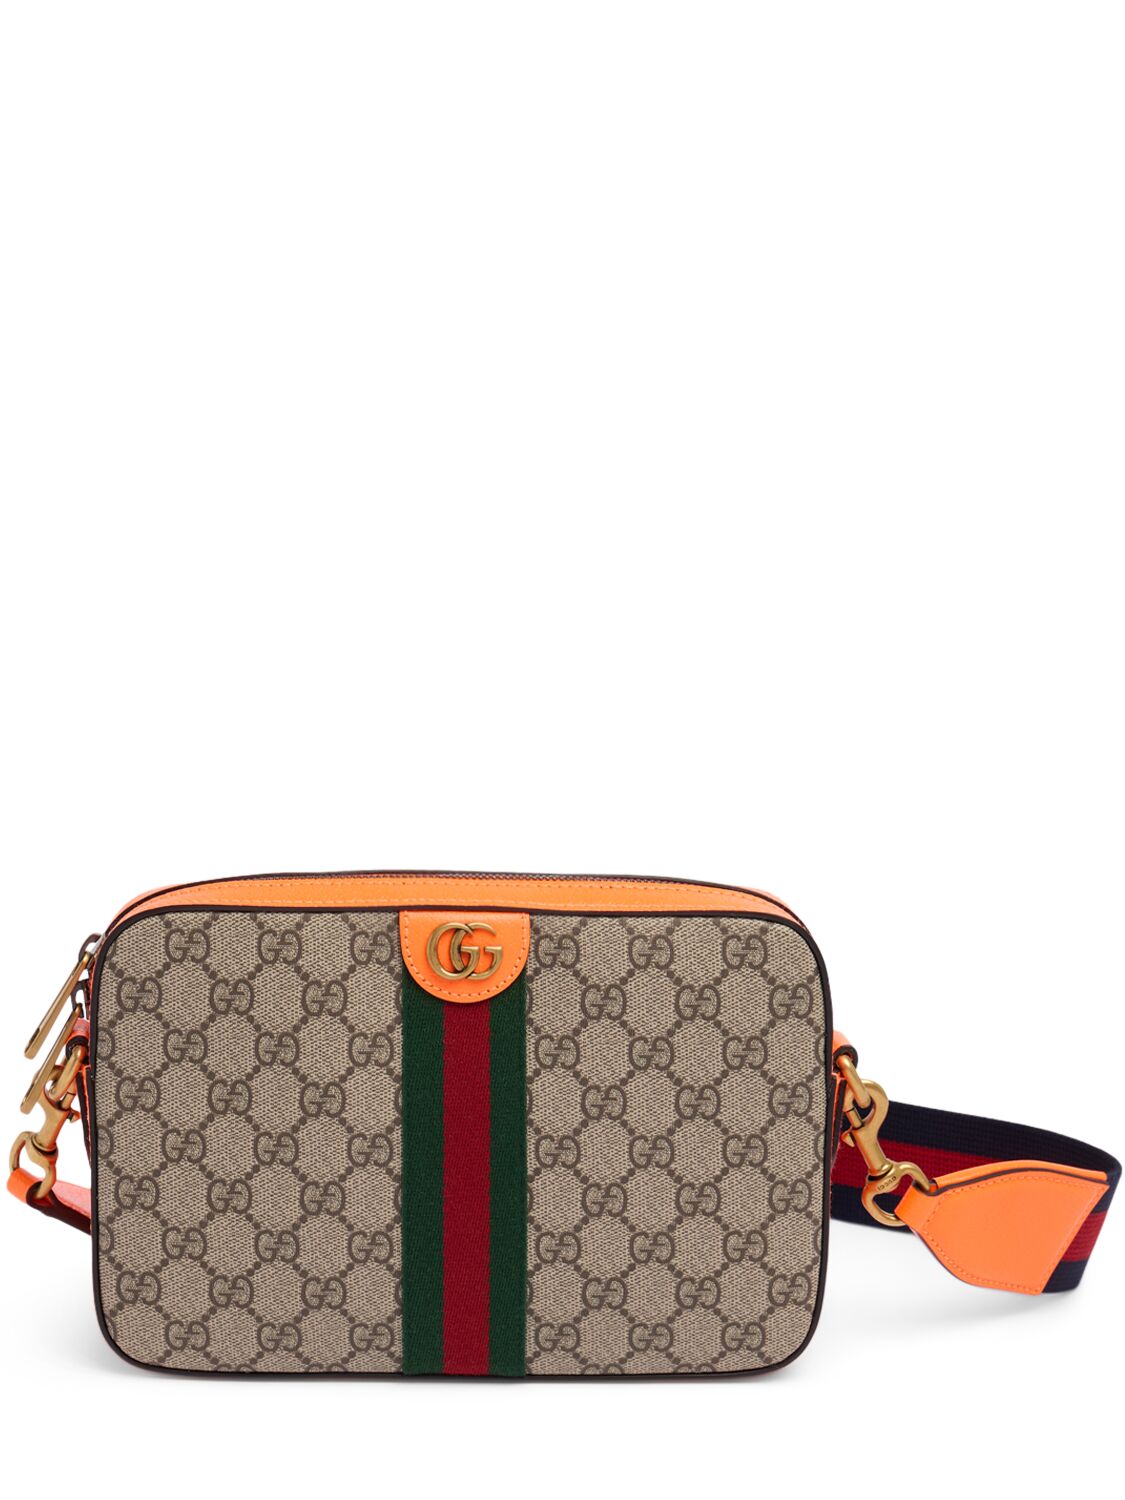 Gucci Ophidia Gg Crossbody Bag In Beige,orange